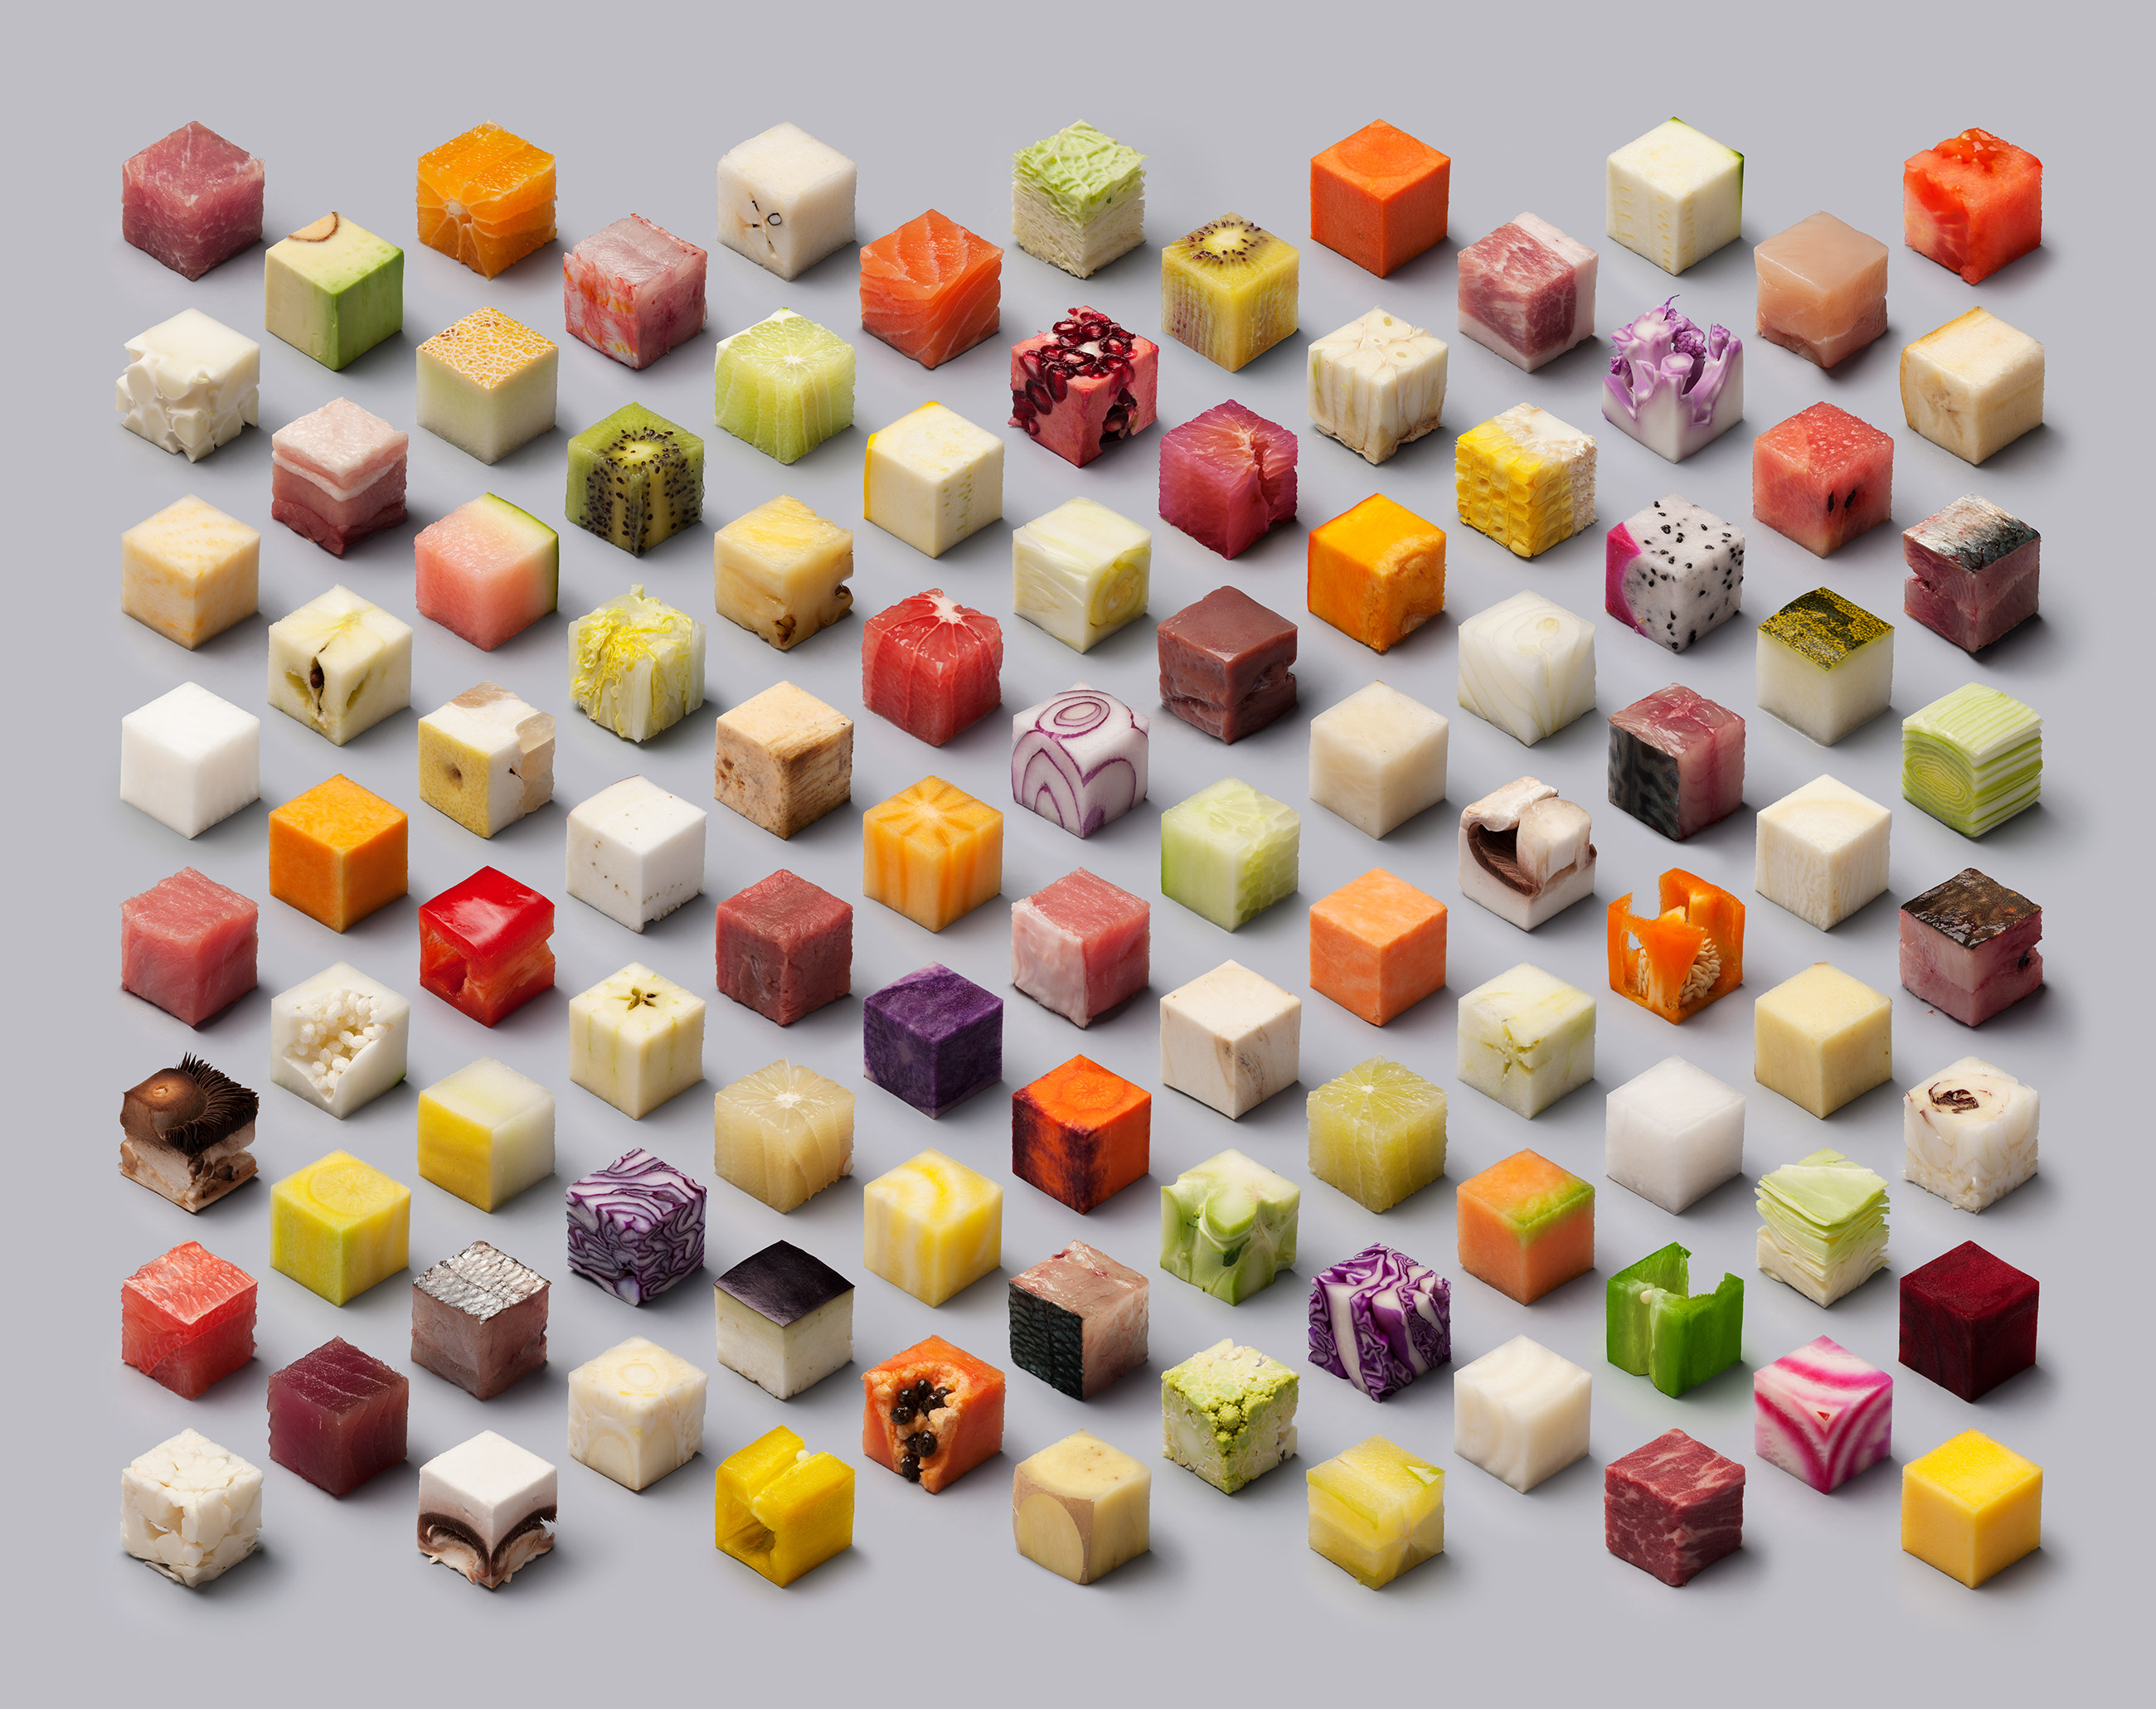 “Cubes,” by Lernert & Sander